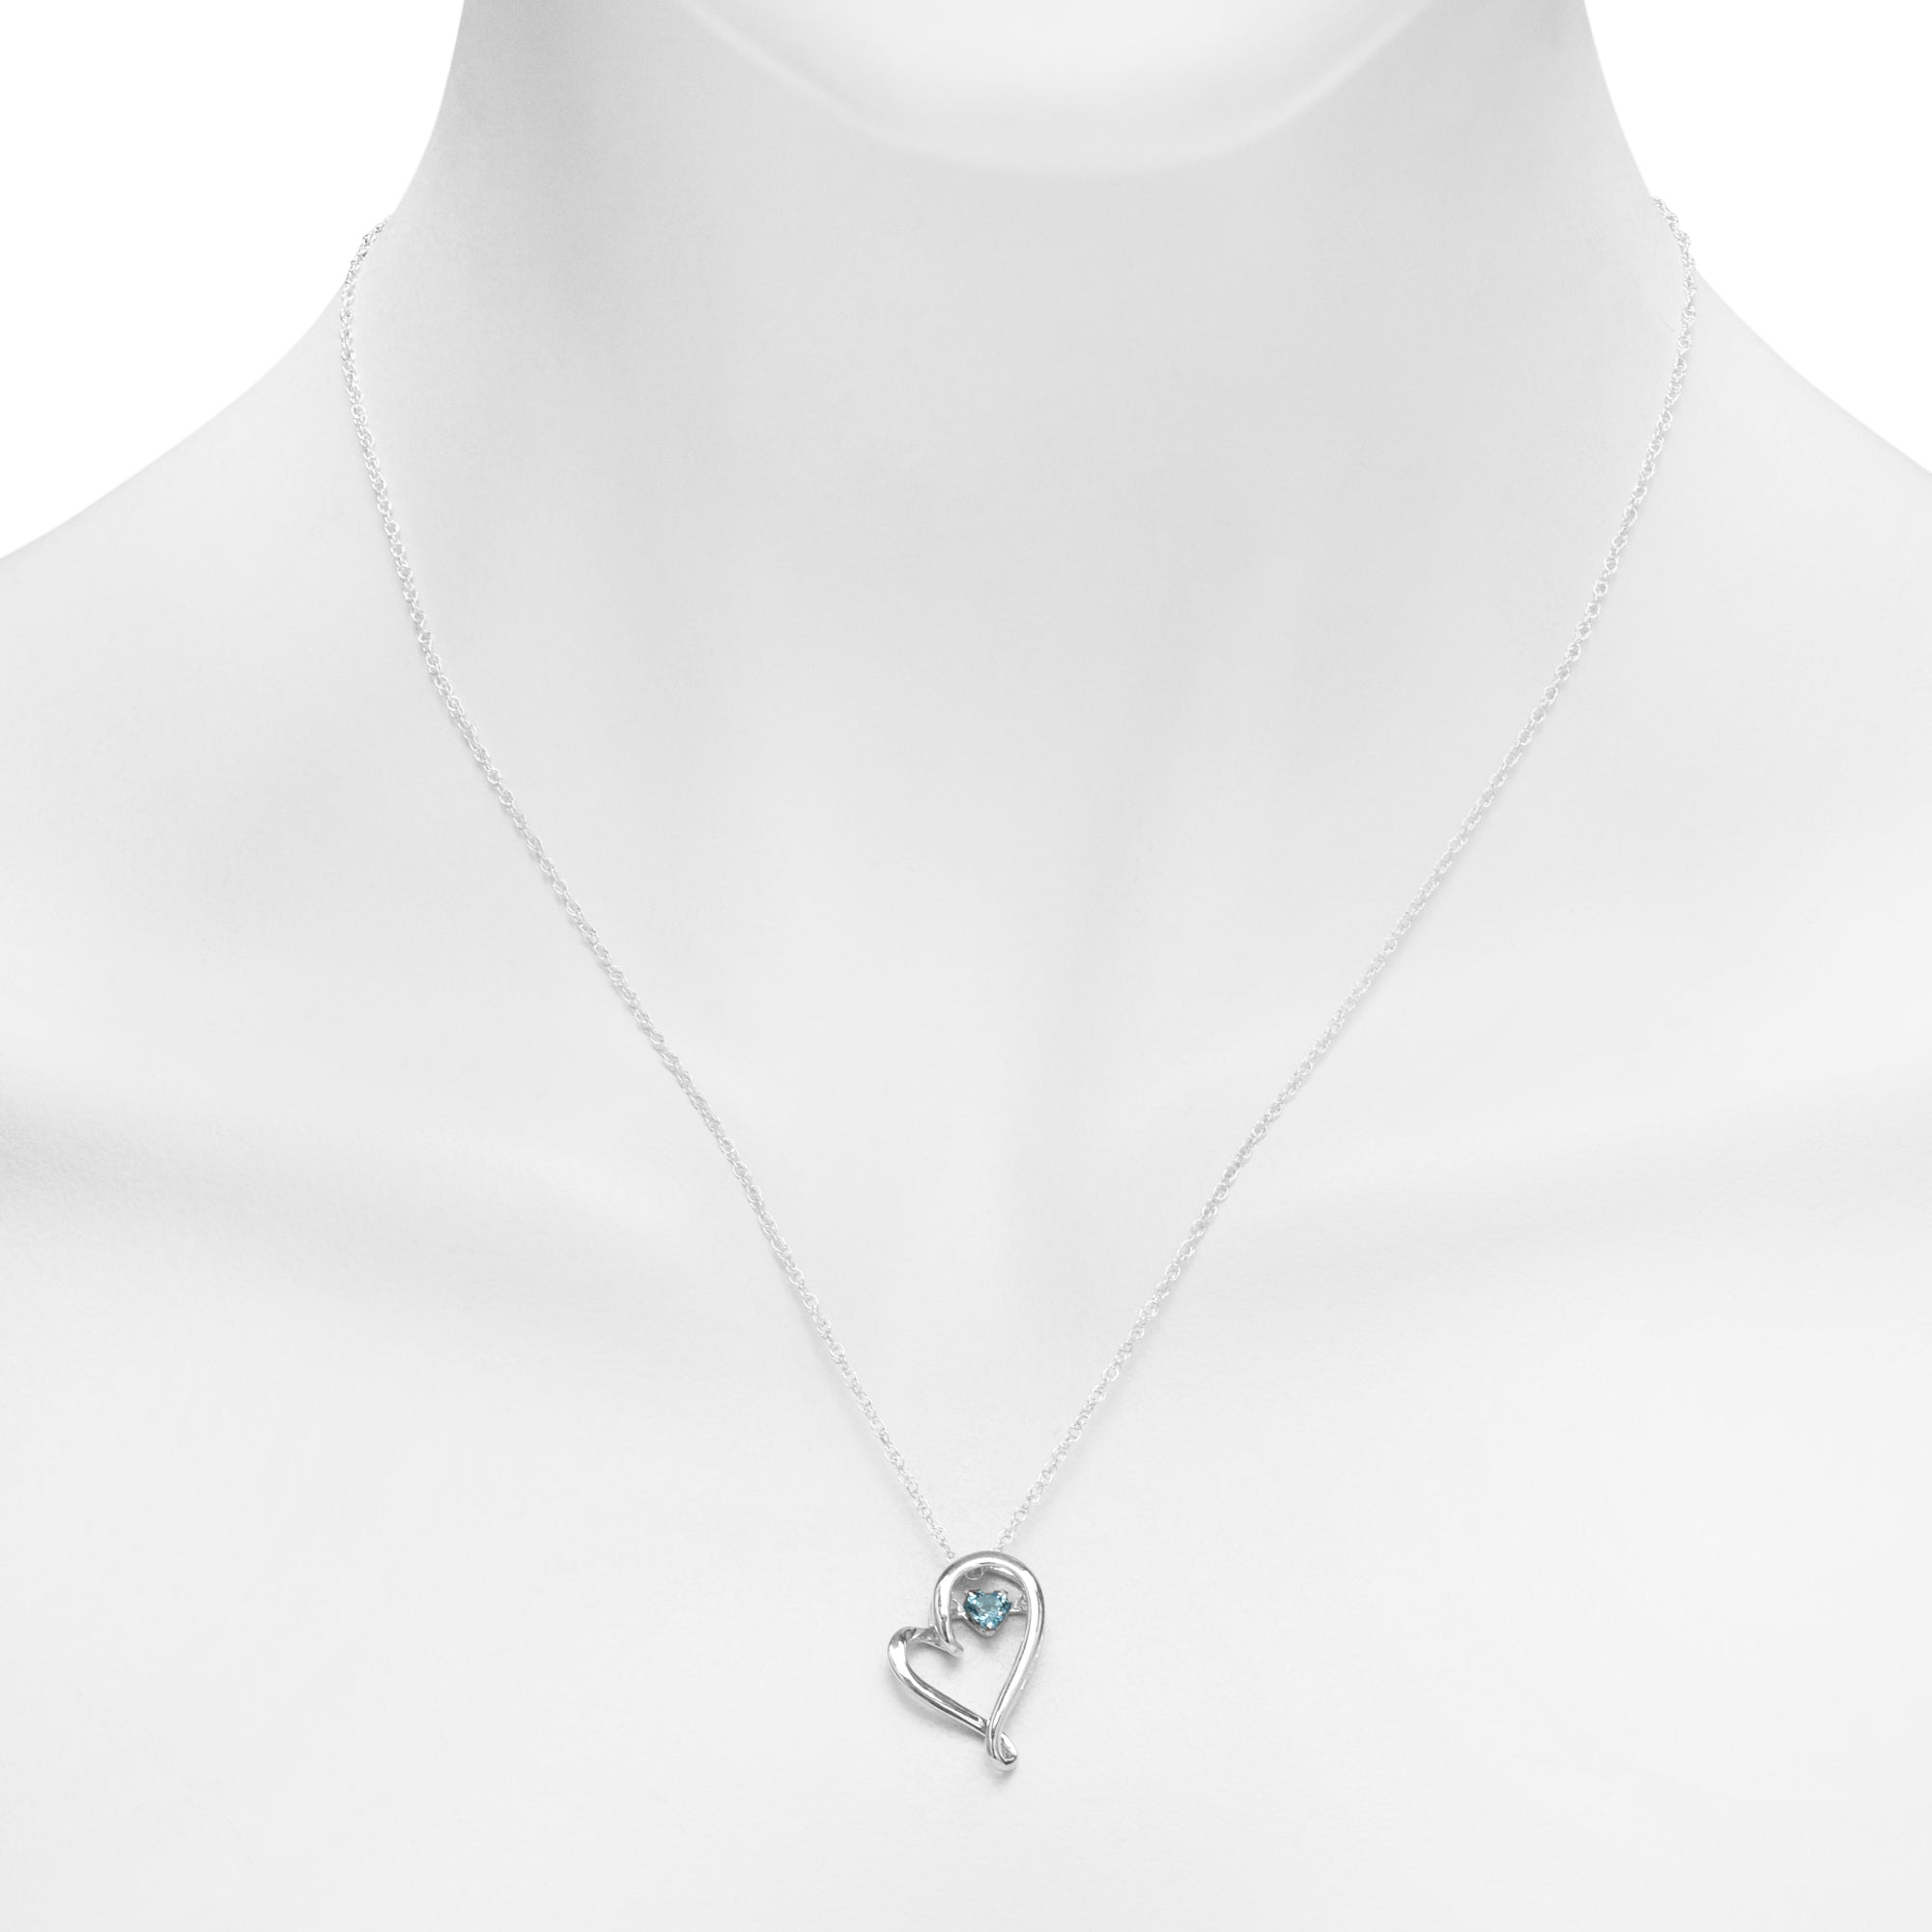 Blue Topaz Heart Necklace in Sterling Silver